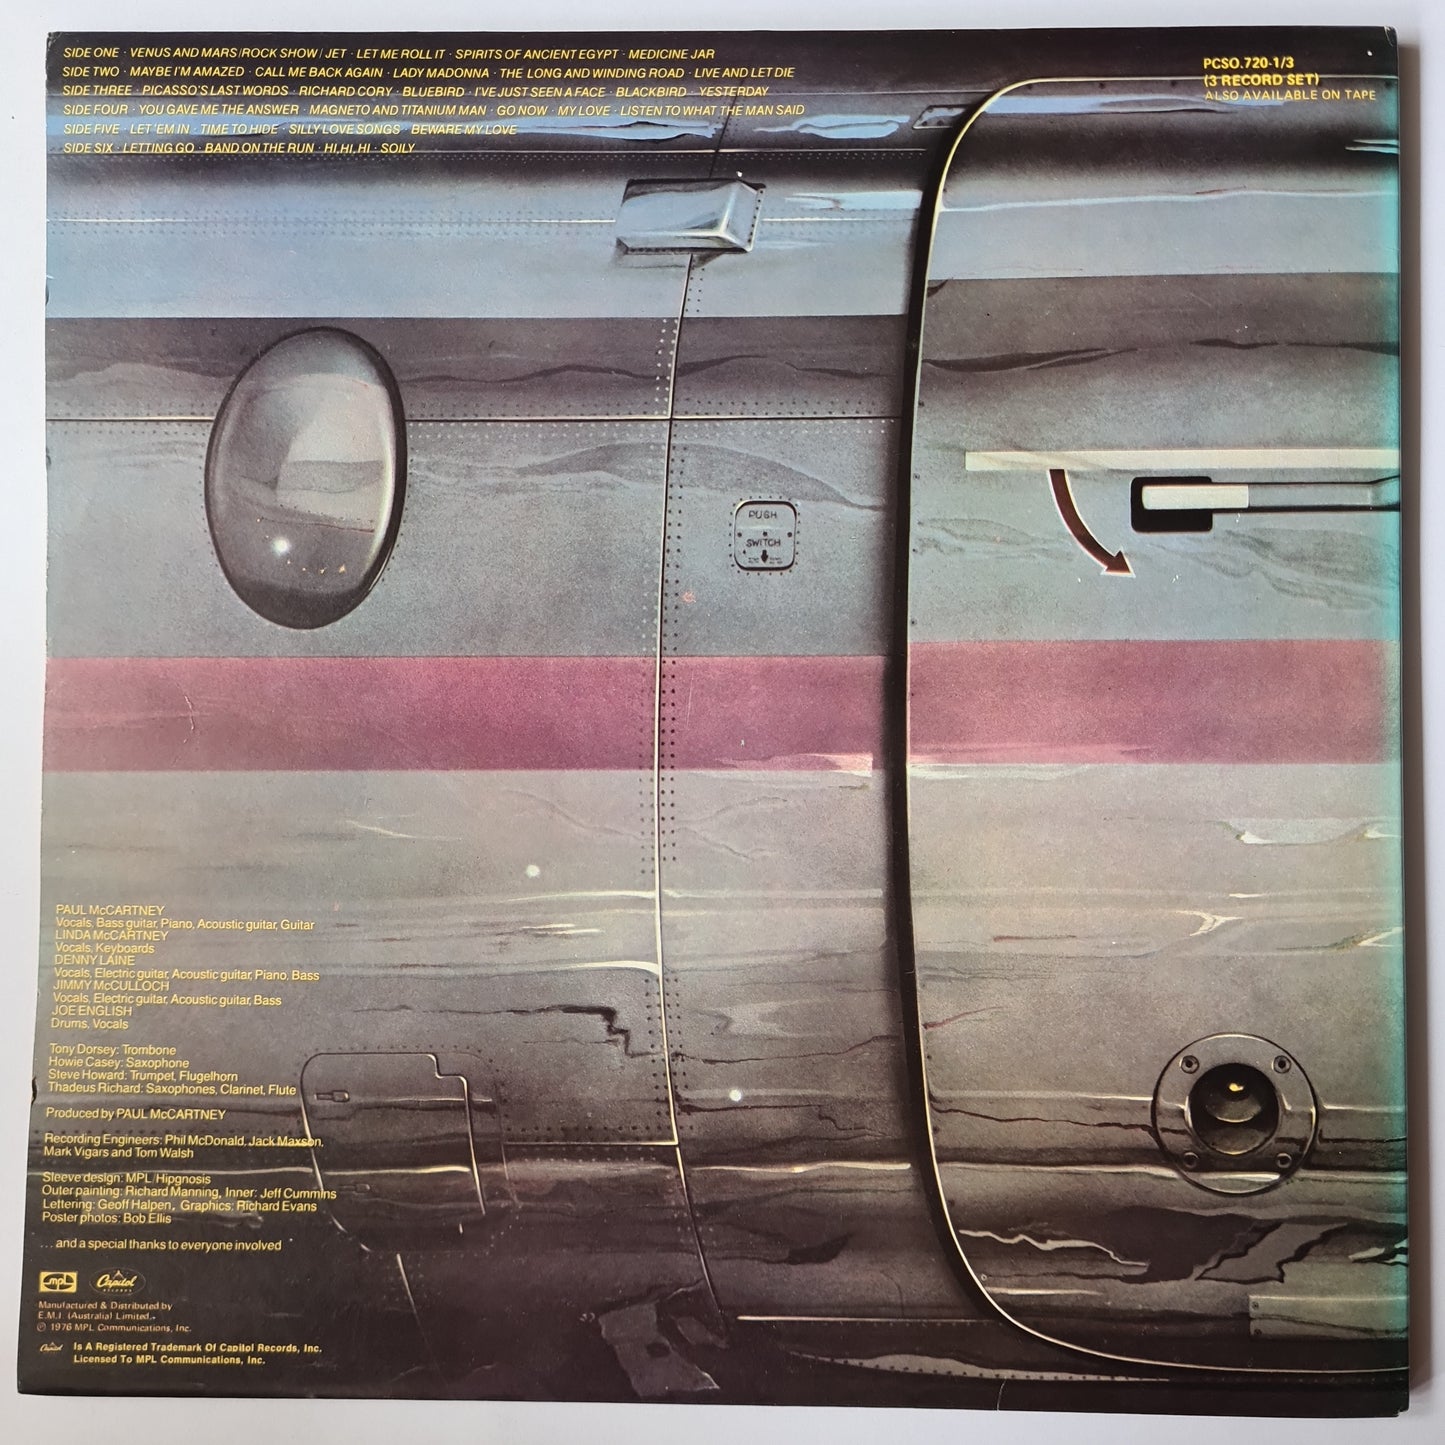 Wings (Paul McCartney) – Wings Over America (3LP Live) - 1973 (Gatefold) - Vinyl Record